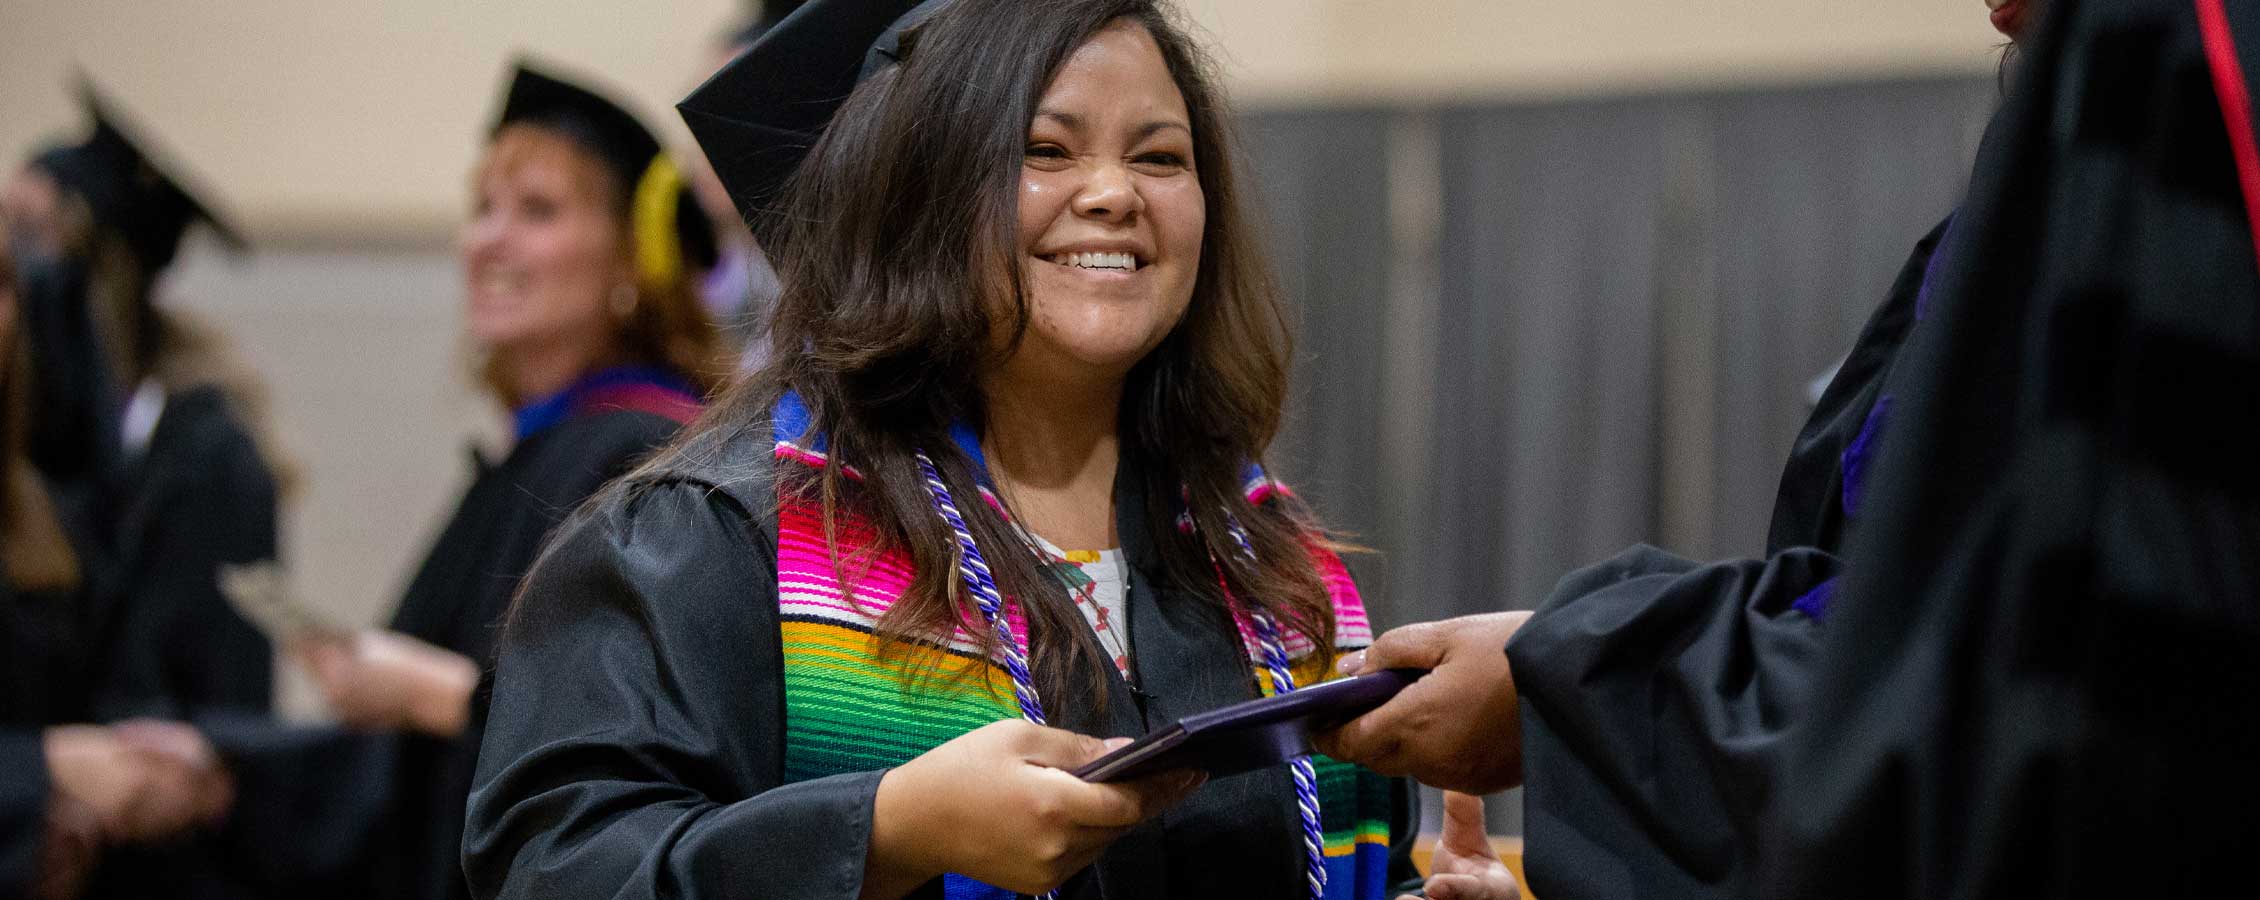 Smiling woman receiving diploma